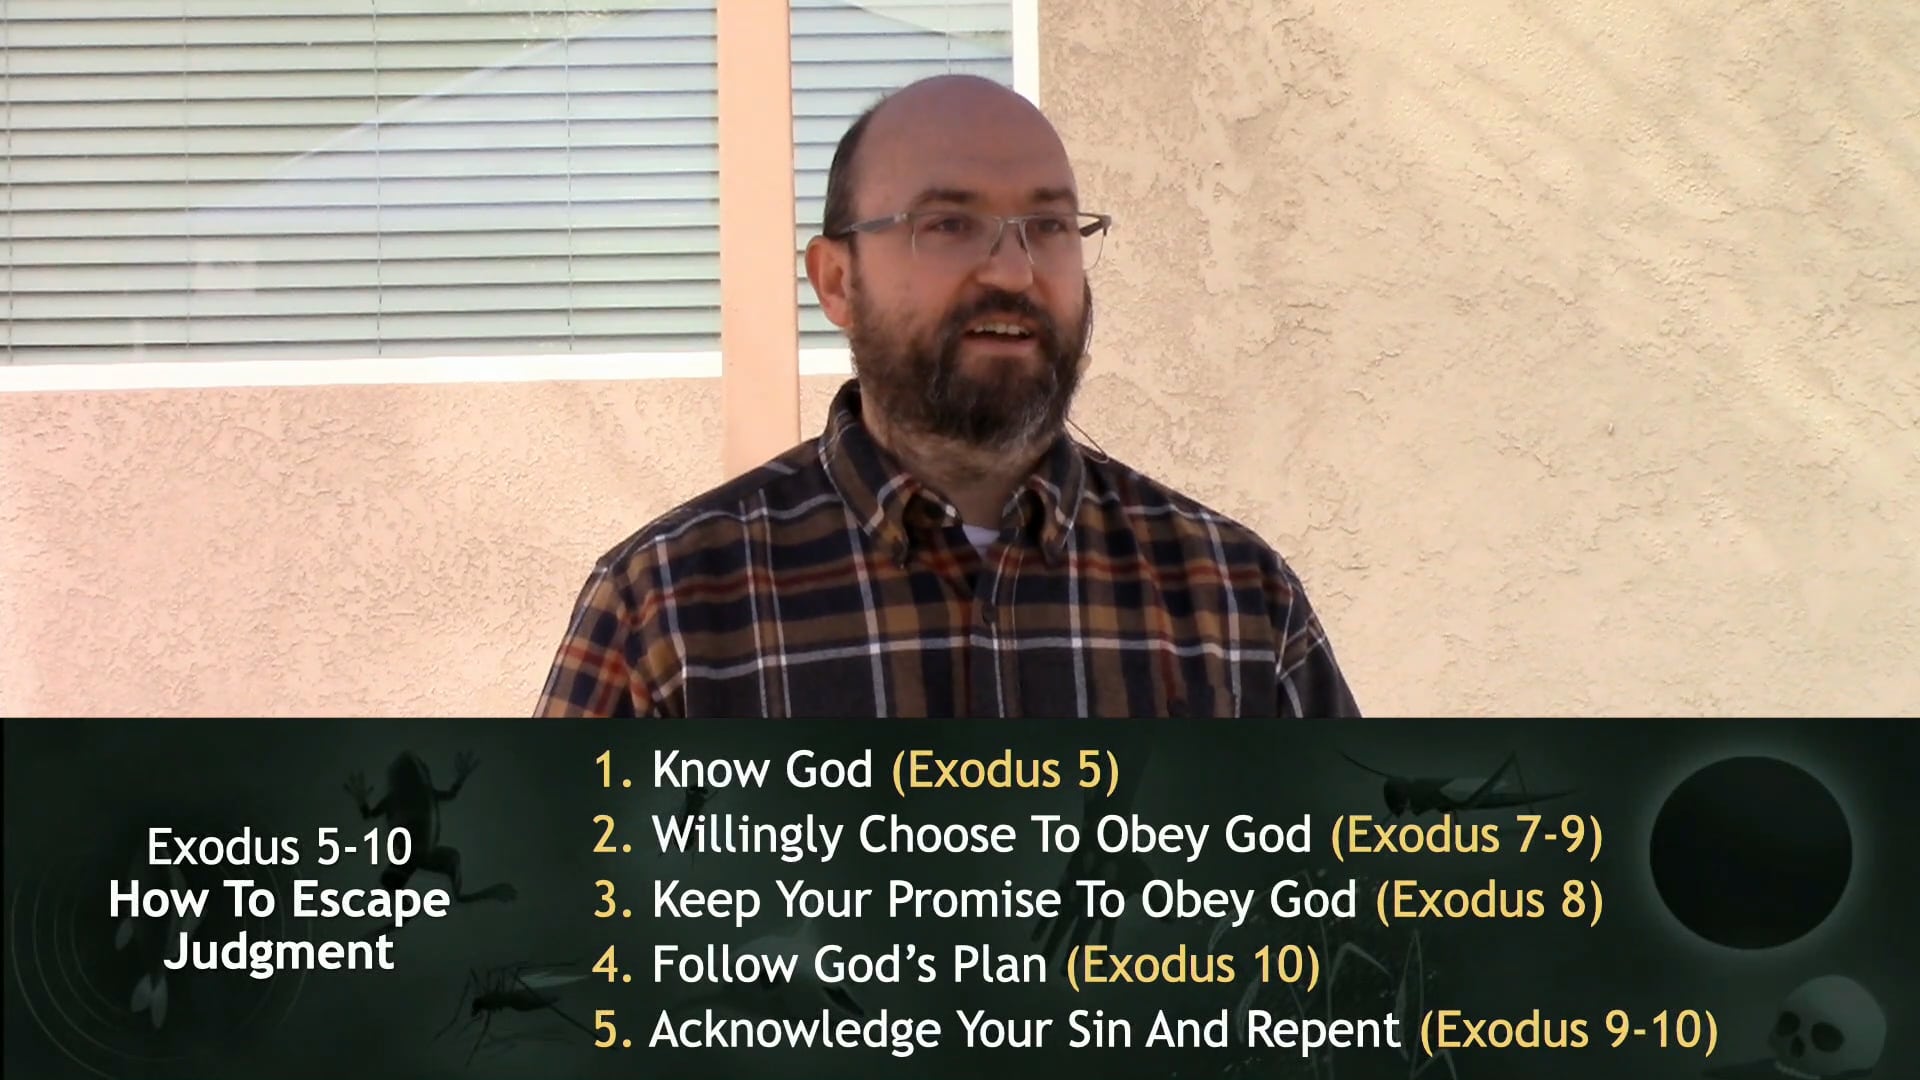 Jerry Simmons teaching Exodus 5-10, How To Experience Judgment Like Pharaoh